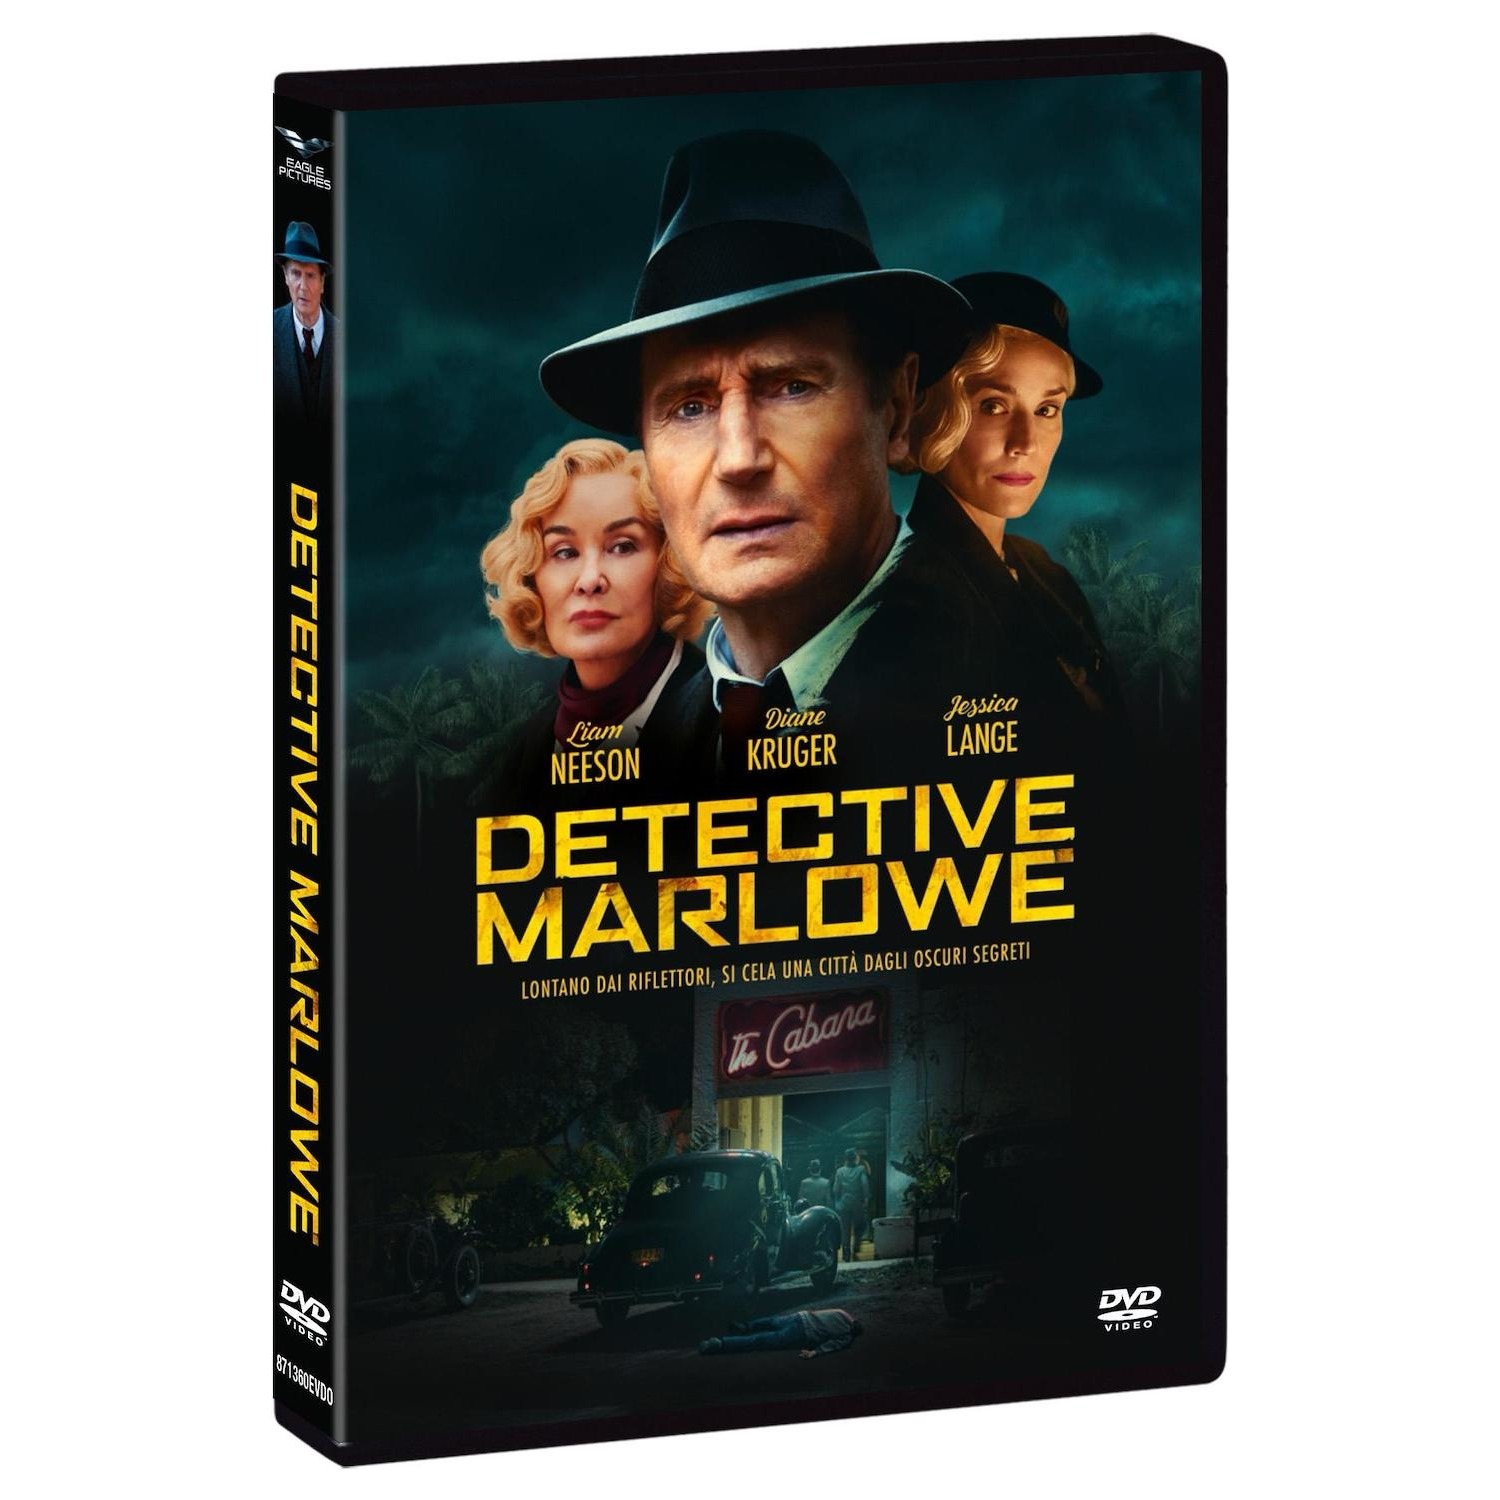 Immagine per DVD Detective Marlowe da DIMOStore